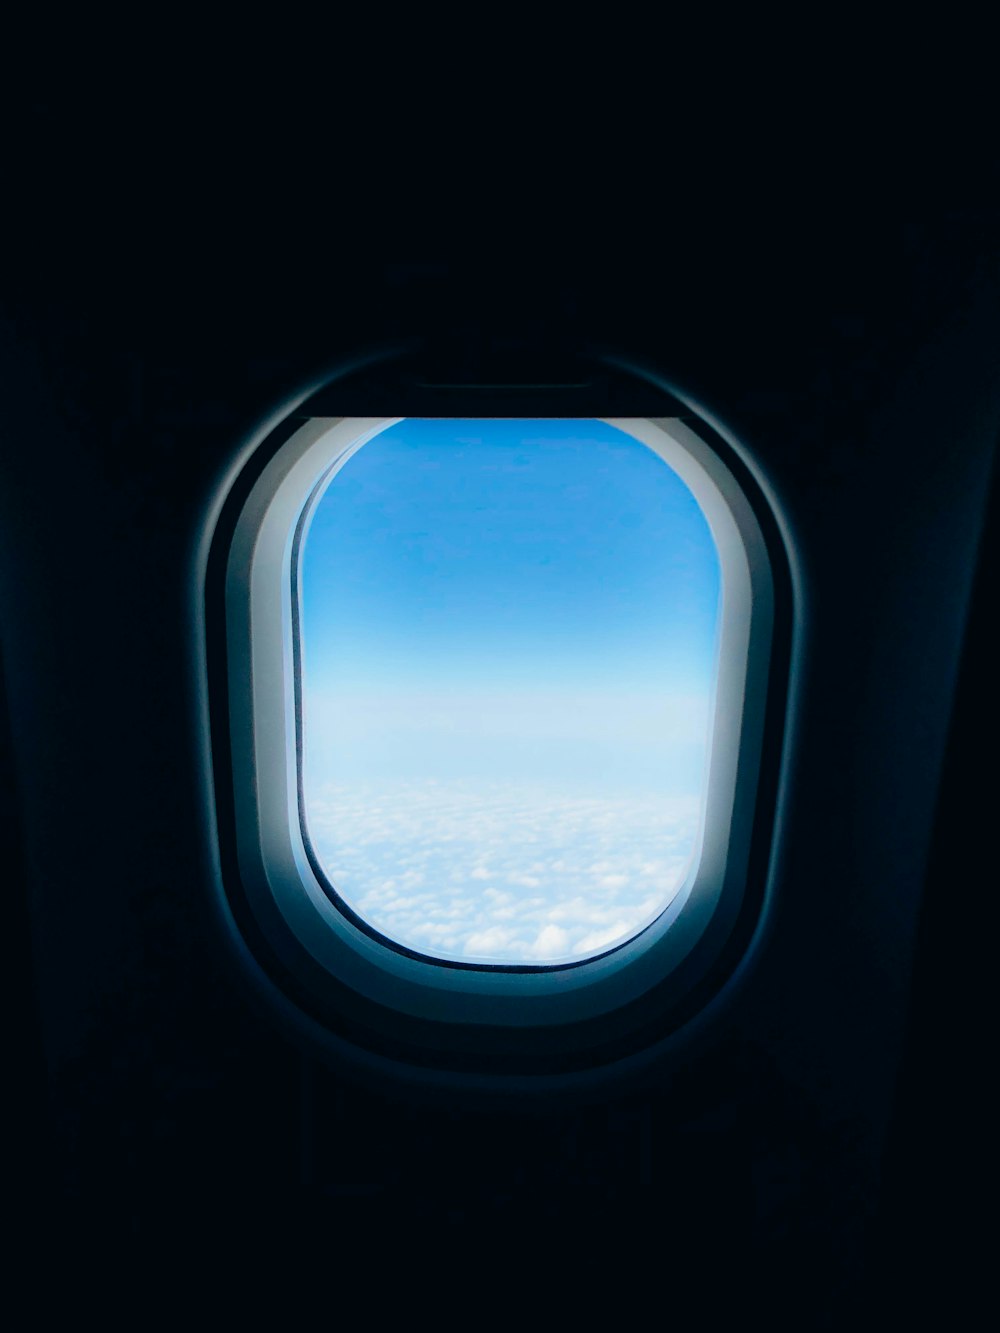 plane's window displaying clouds